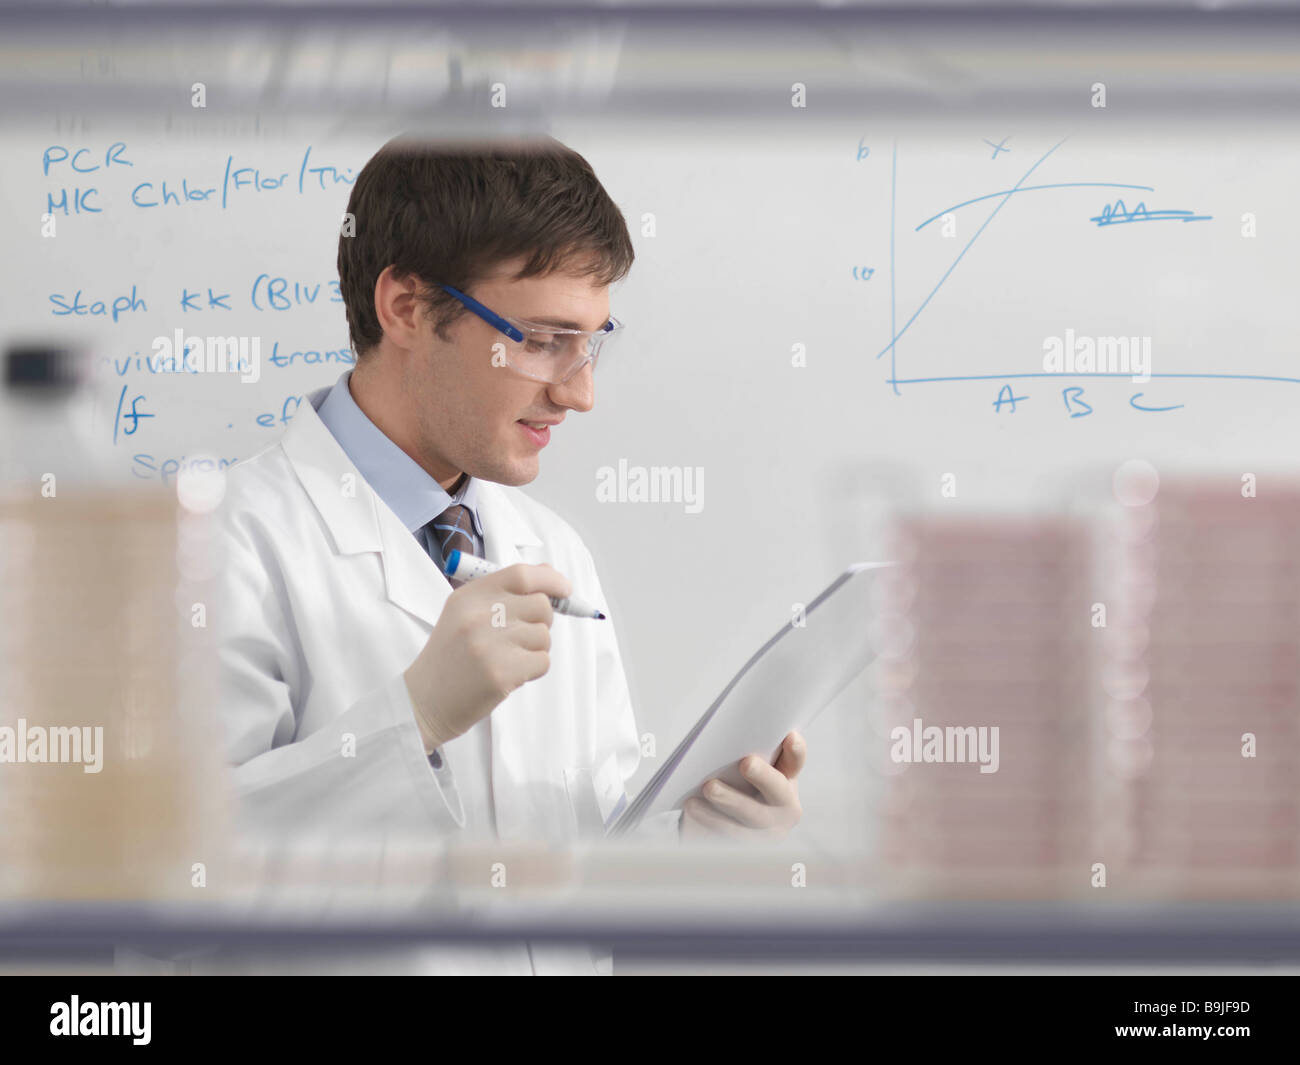 Laboratory technician and whiteboard Stock Photo